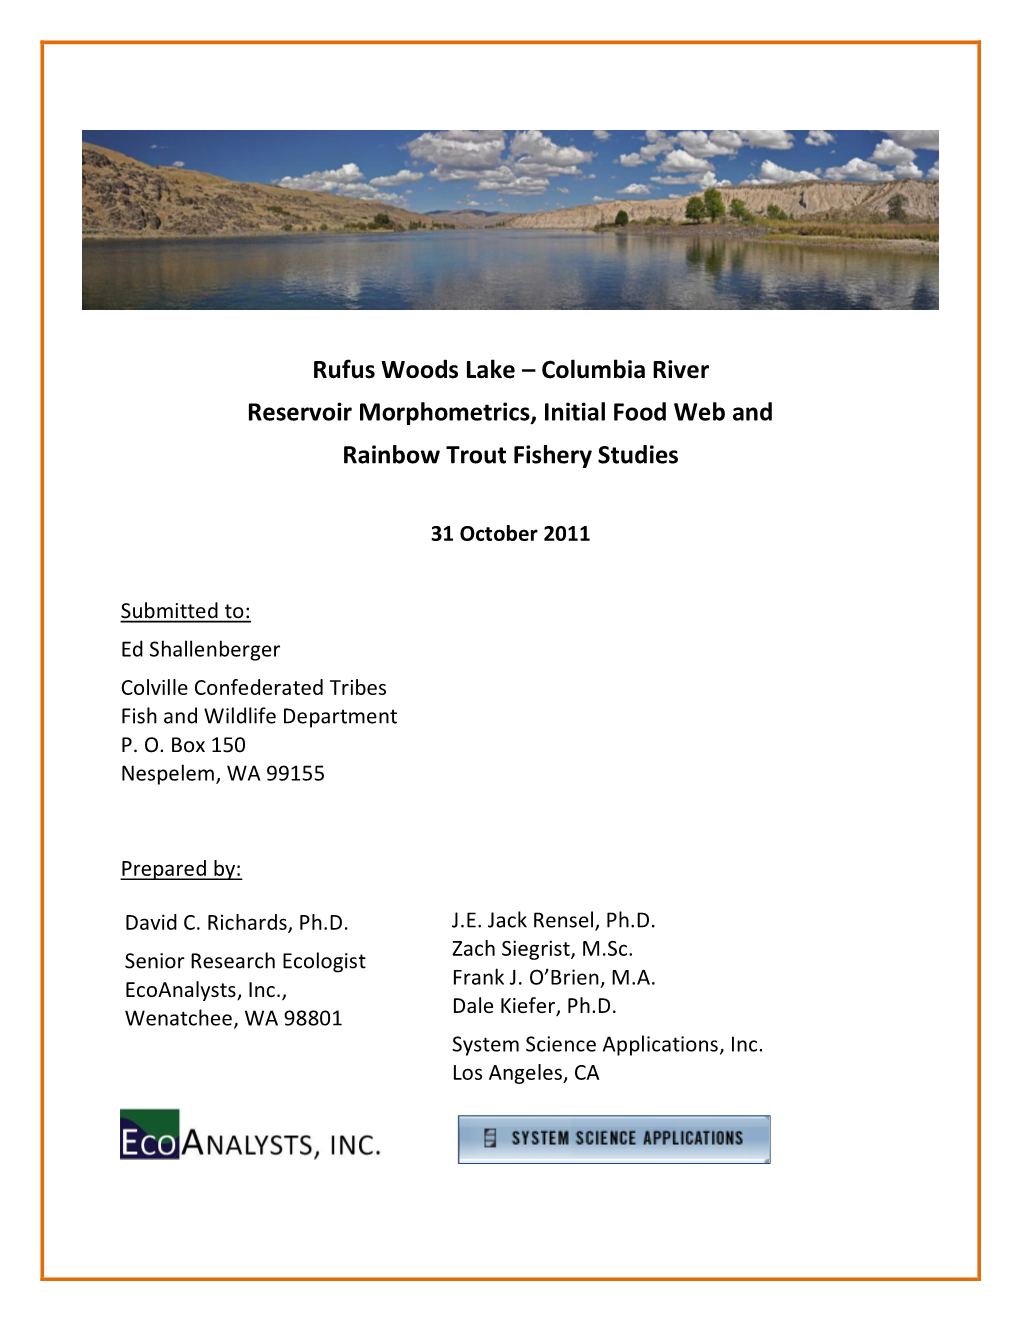 Rufus Woods Lake – Columbia River Reservoir Morphometrics, Initial Food Web and Rainbow Trout Fishery Studies